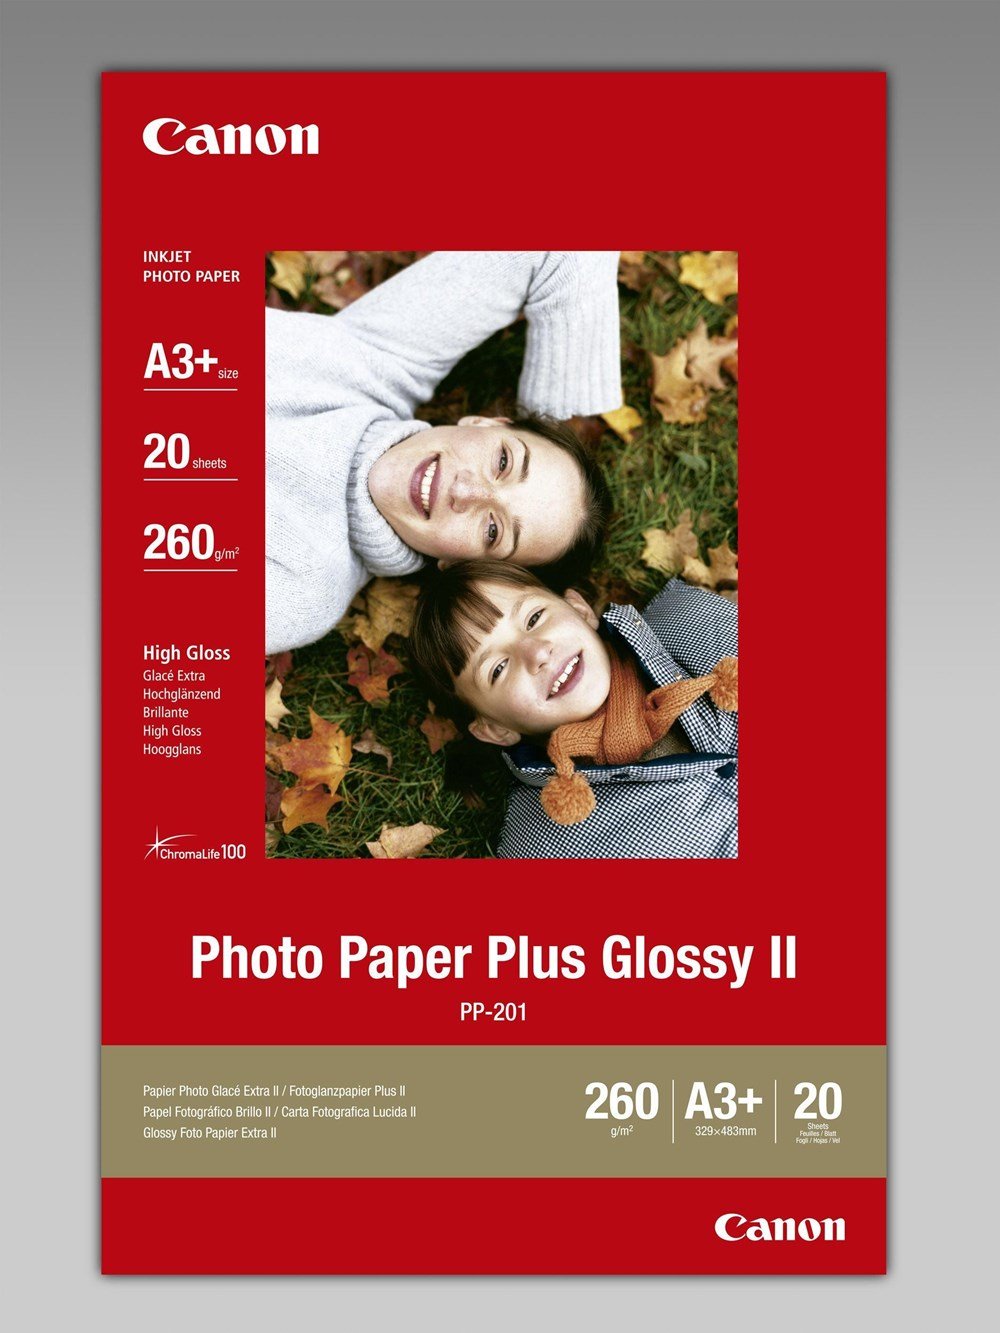 Canon PIXMA A3+ Photo Paper Glossy II Canon Inkjet Paper